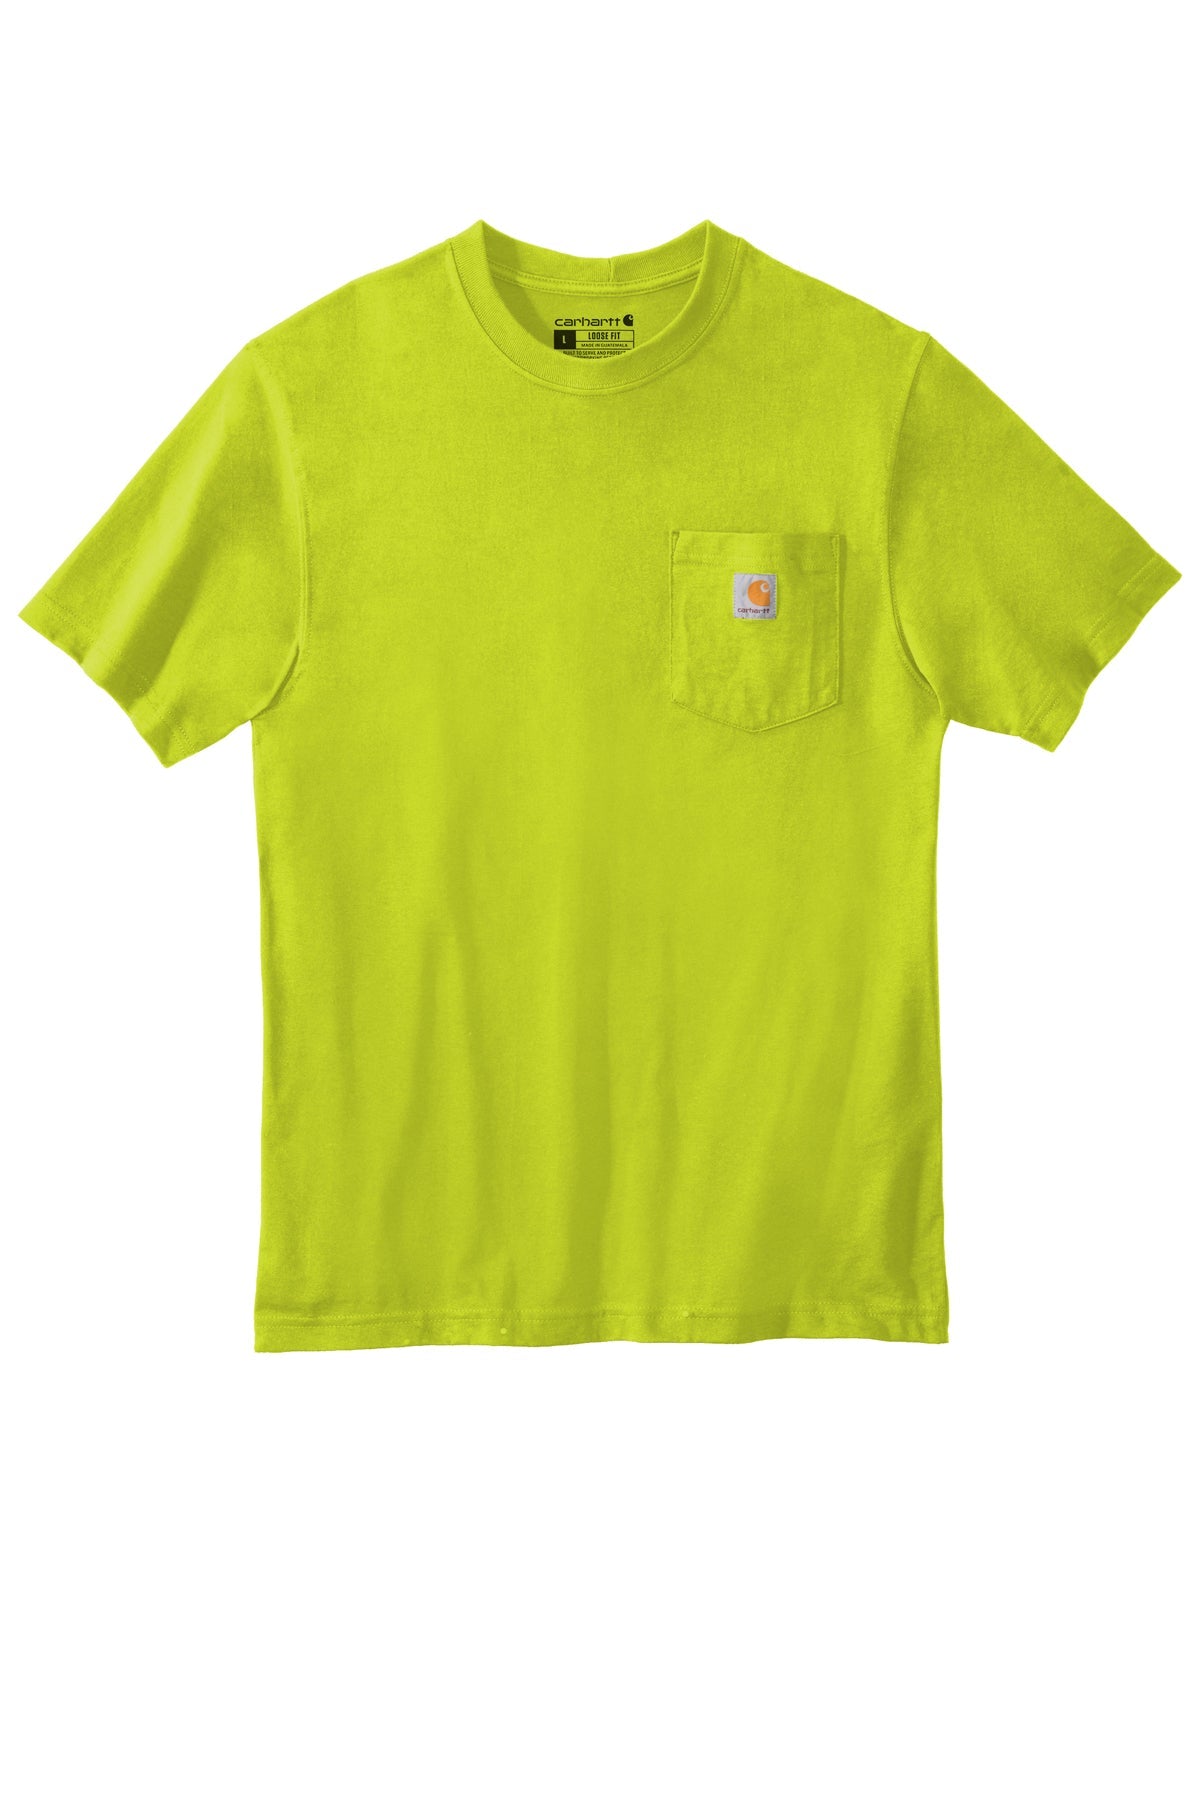 CTK87 Carhartt Workwear Pocket Short Sleeve T-Shirt